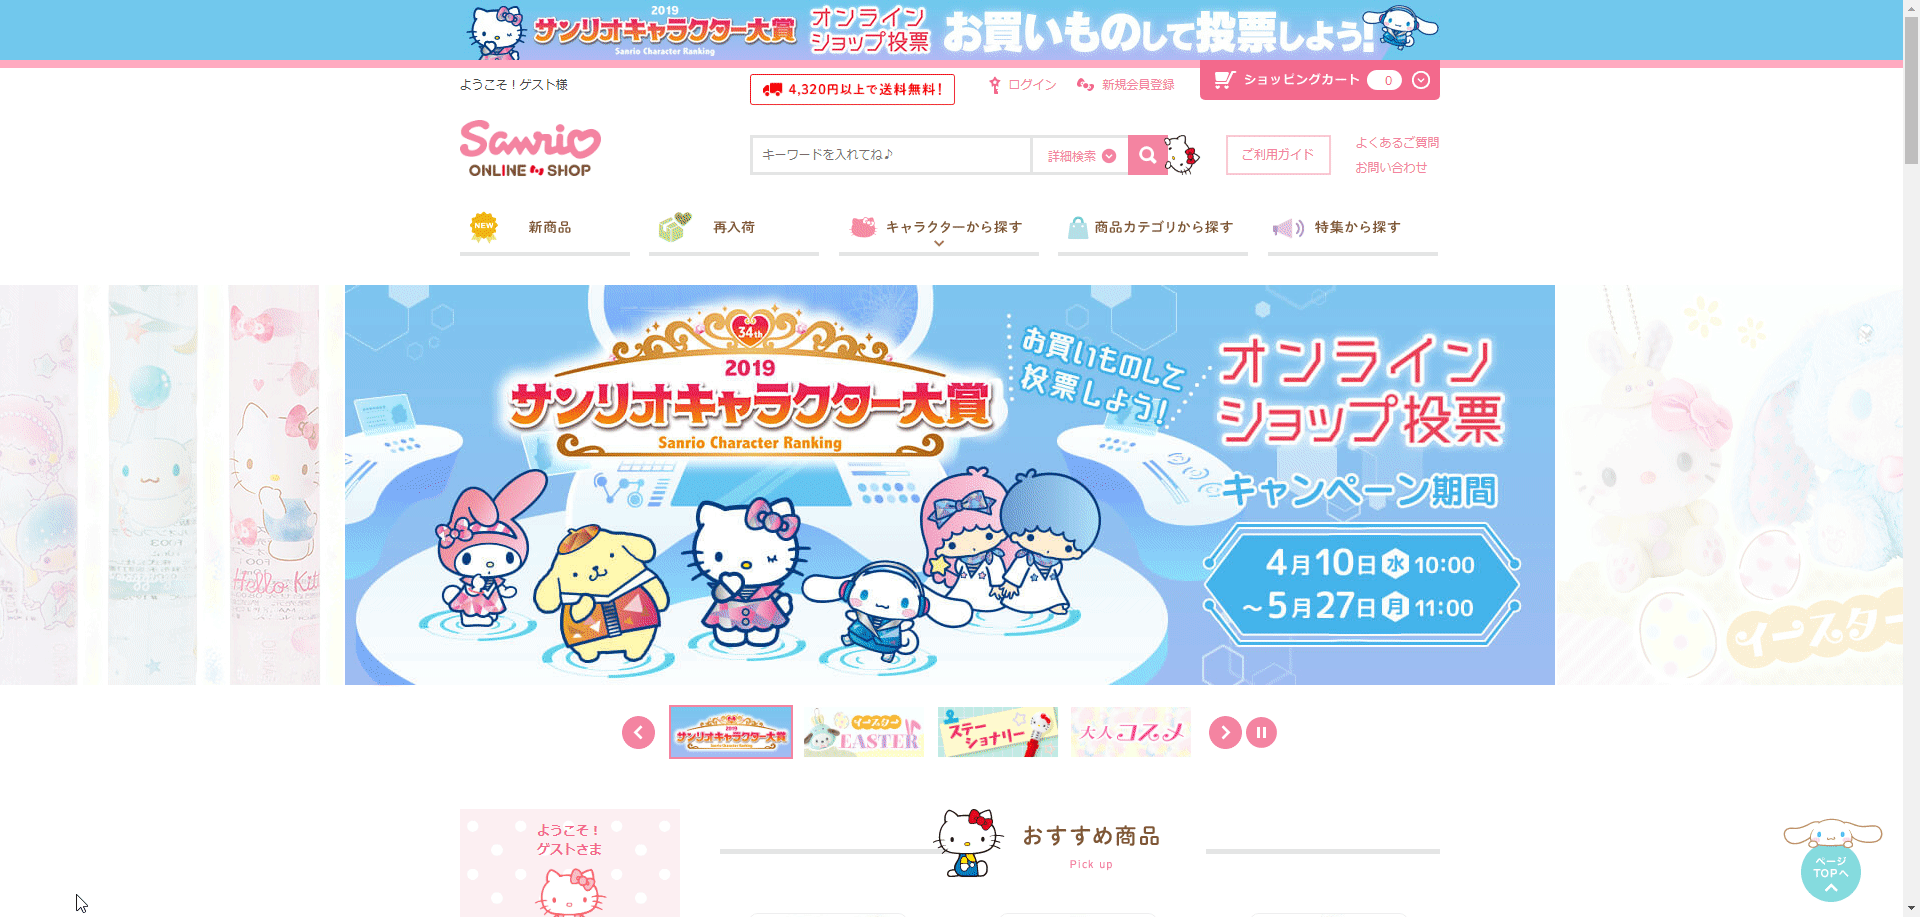 How To Purchase From Sanrio Japan Online Zenmarket Tutorial Zenmarket Jp Japan Shopping Proxy Service